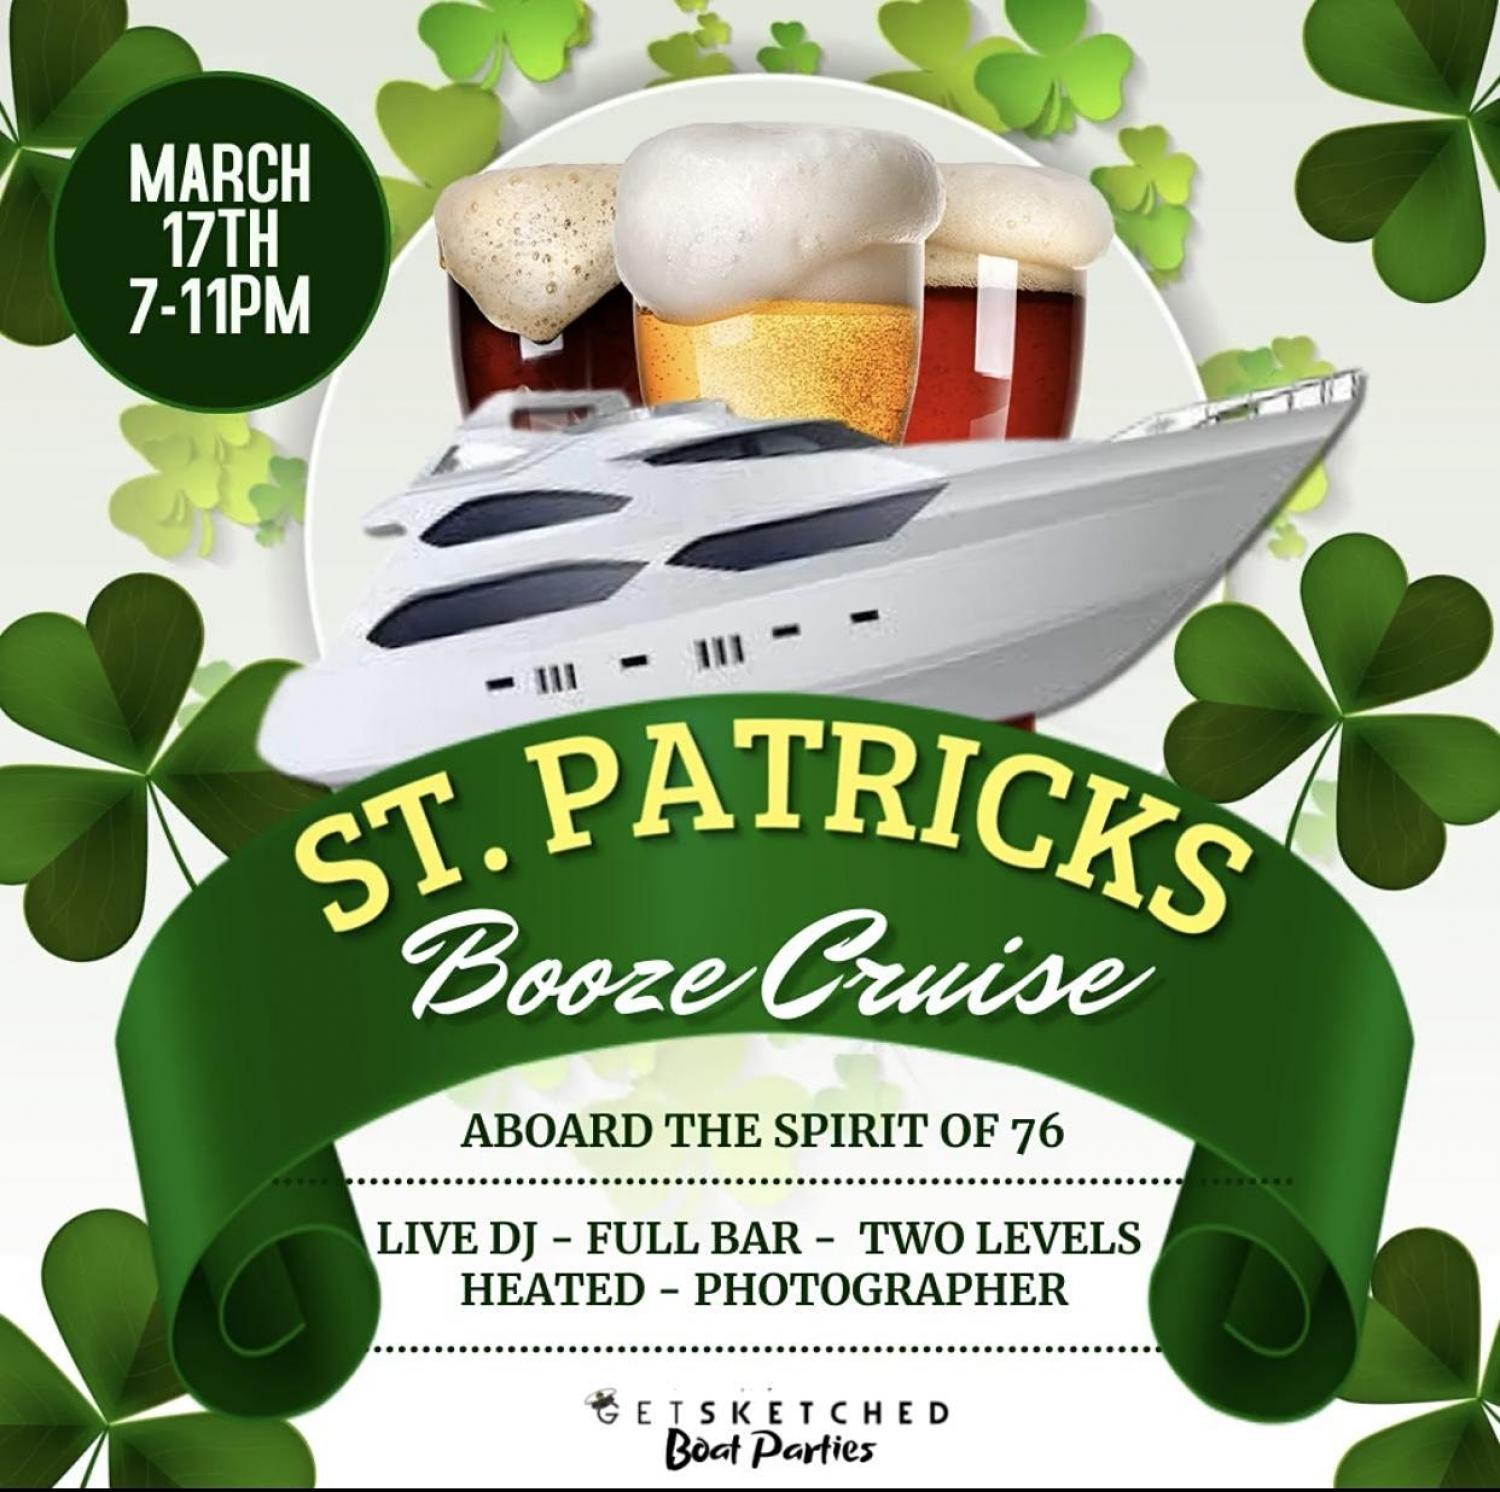 St. Patrick's Day Booze Cruise 2022